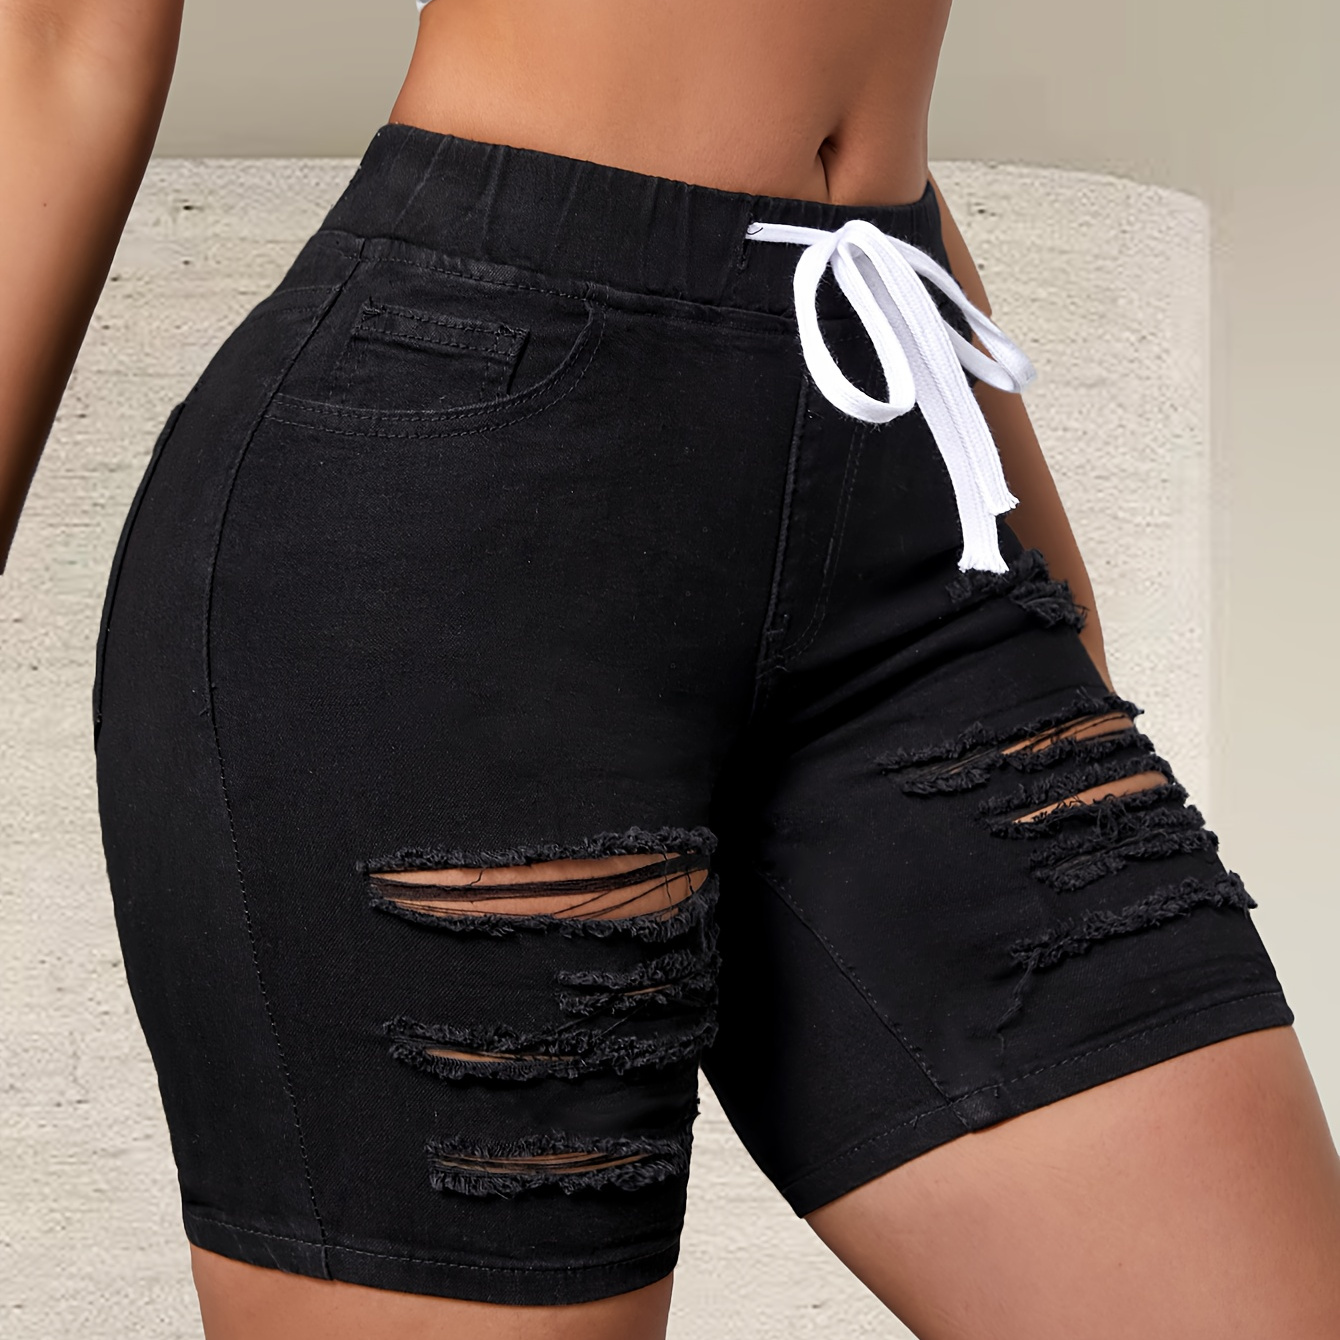 

Women's Elegant Black Color Plain Ripped Bermuda Denim Shorts With Drawstring Waist And Pockets, Mid-thigh Length Casual Summer Fashion